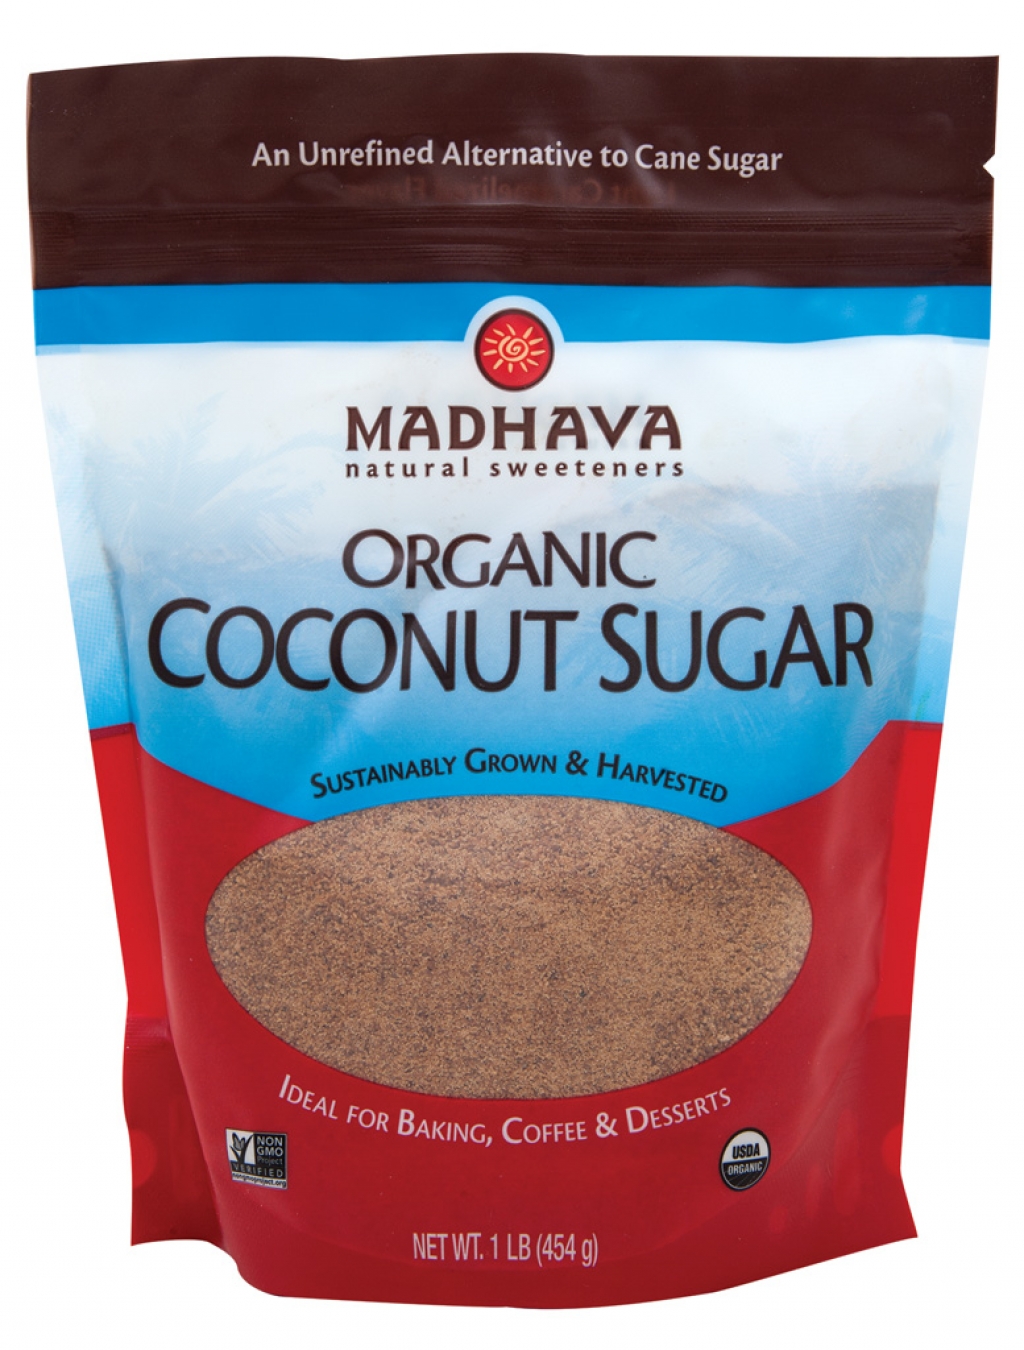 Madhava Organic Coconut Sugar